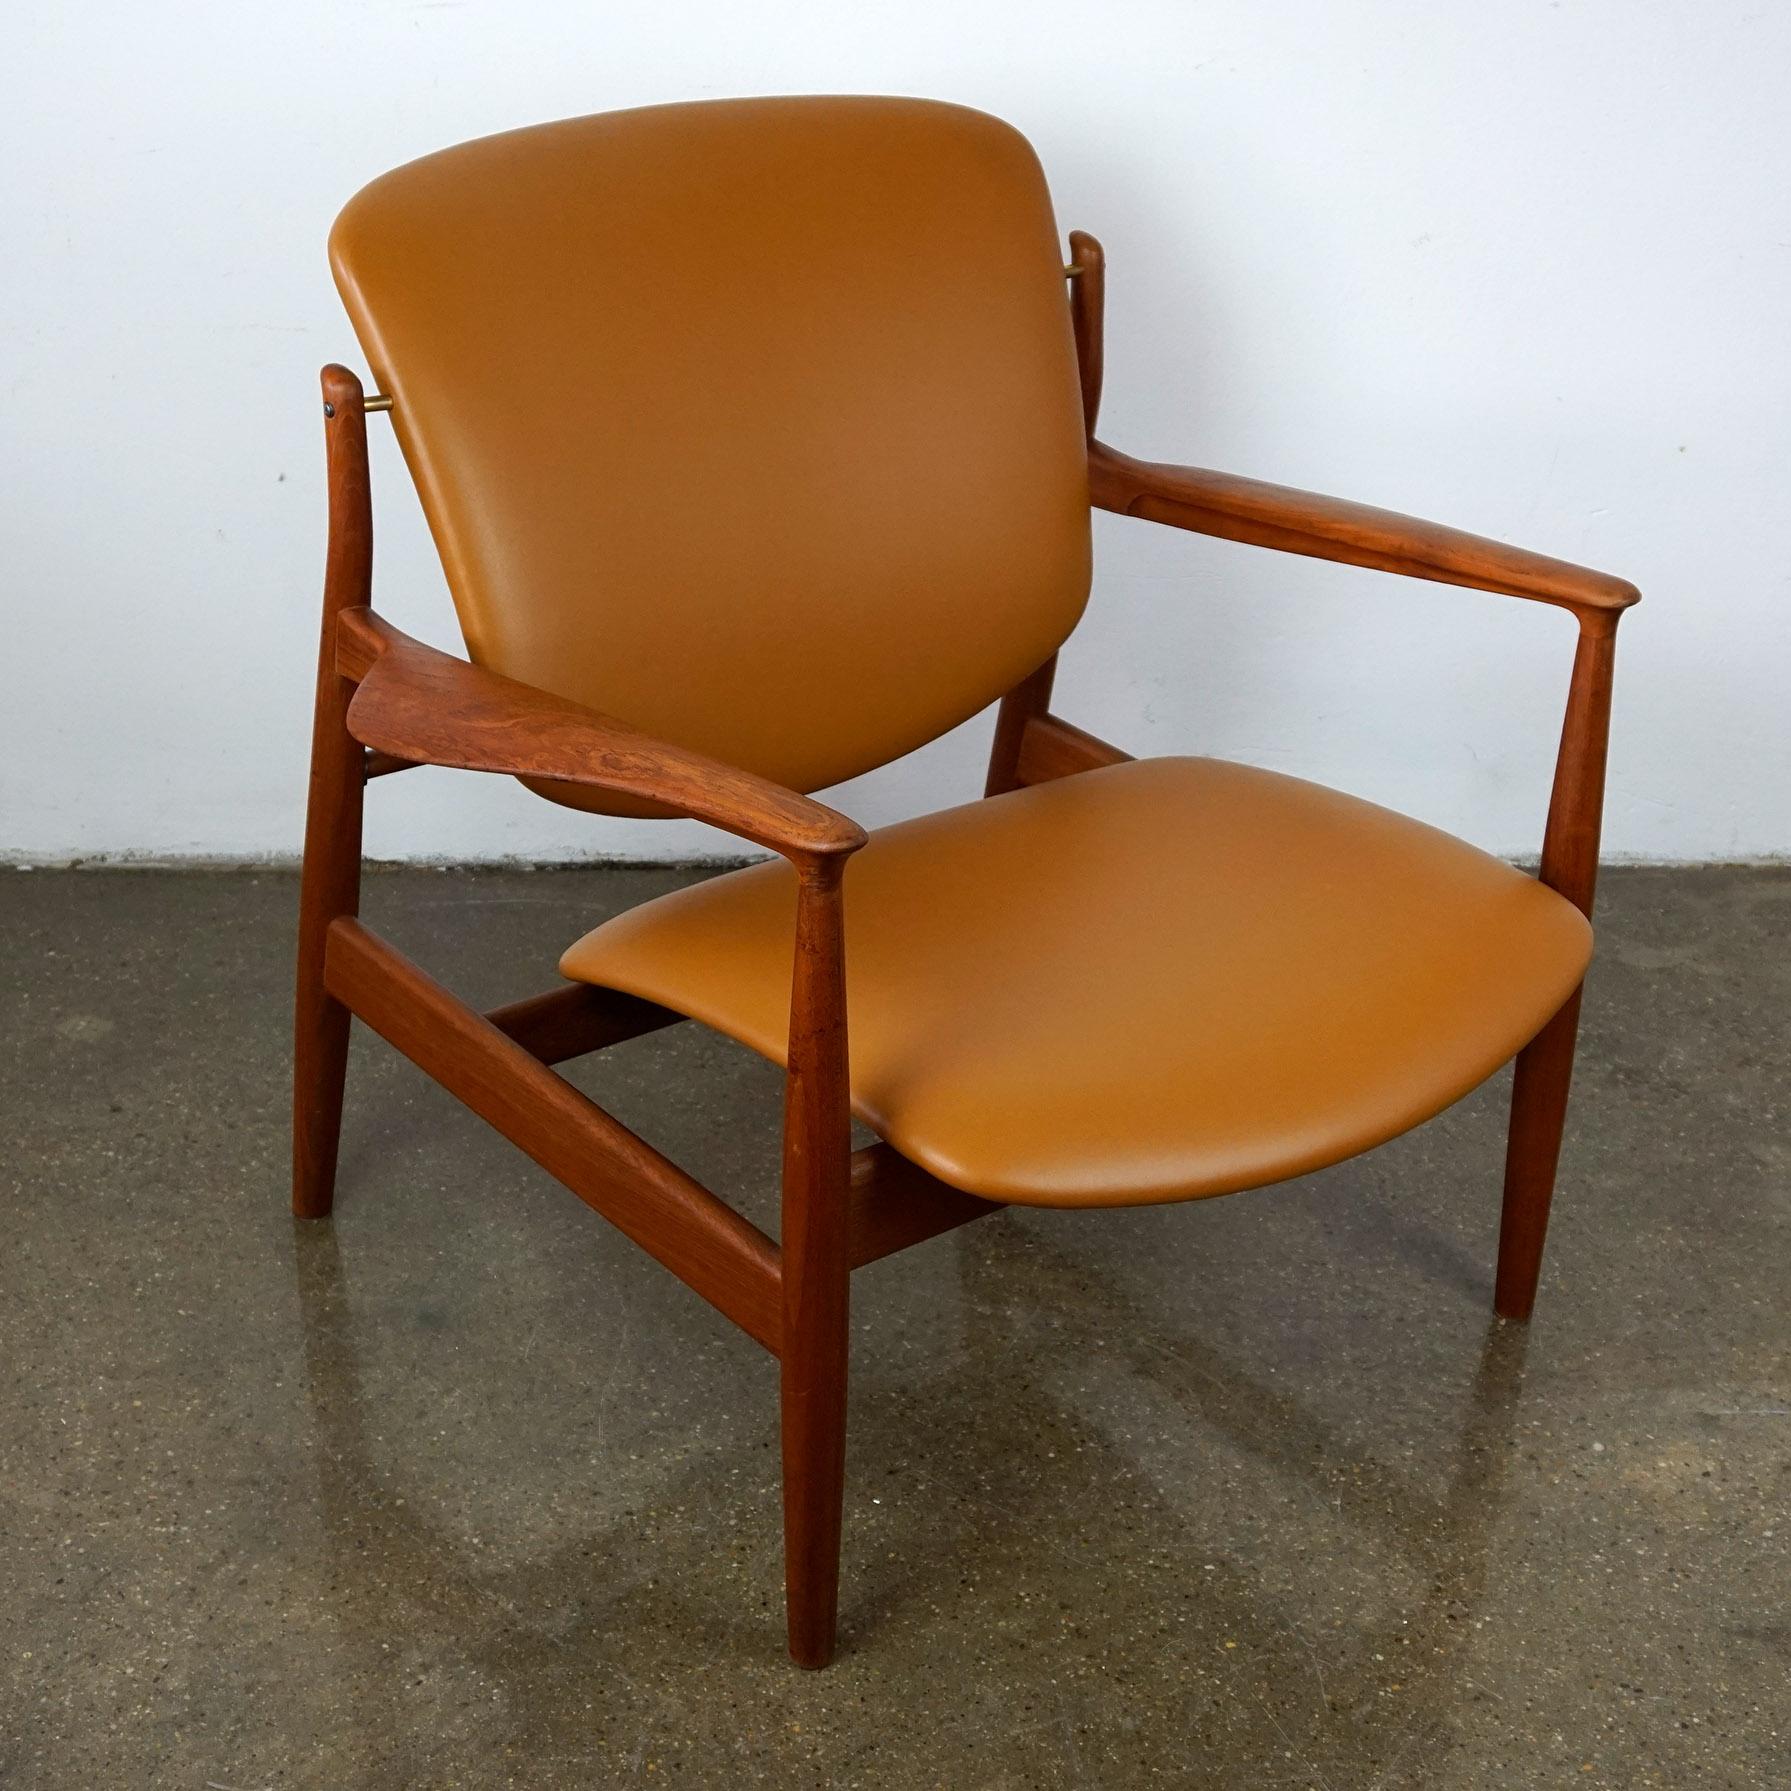 Mid-20th Century Scandinavian Modern Teak and Cognac Leather Lounge Chair by Finn Juhl